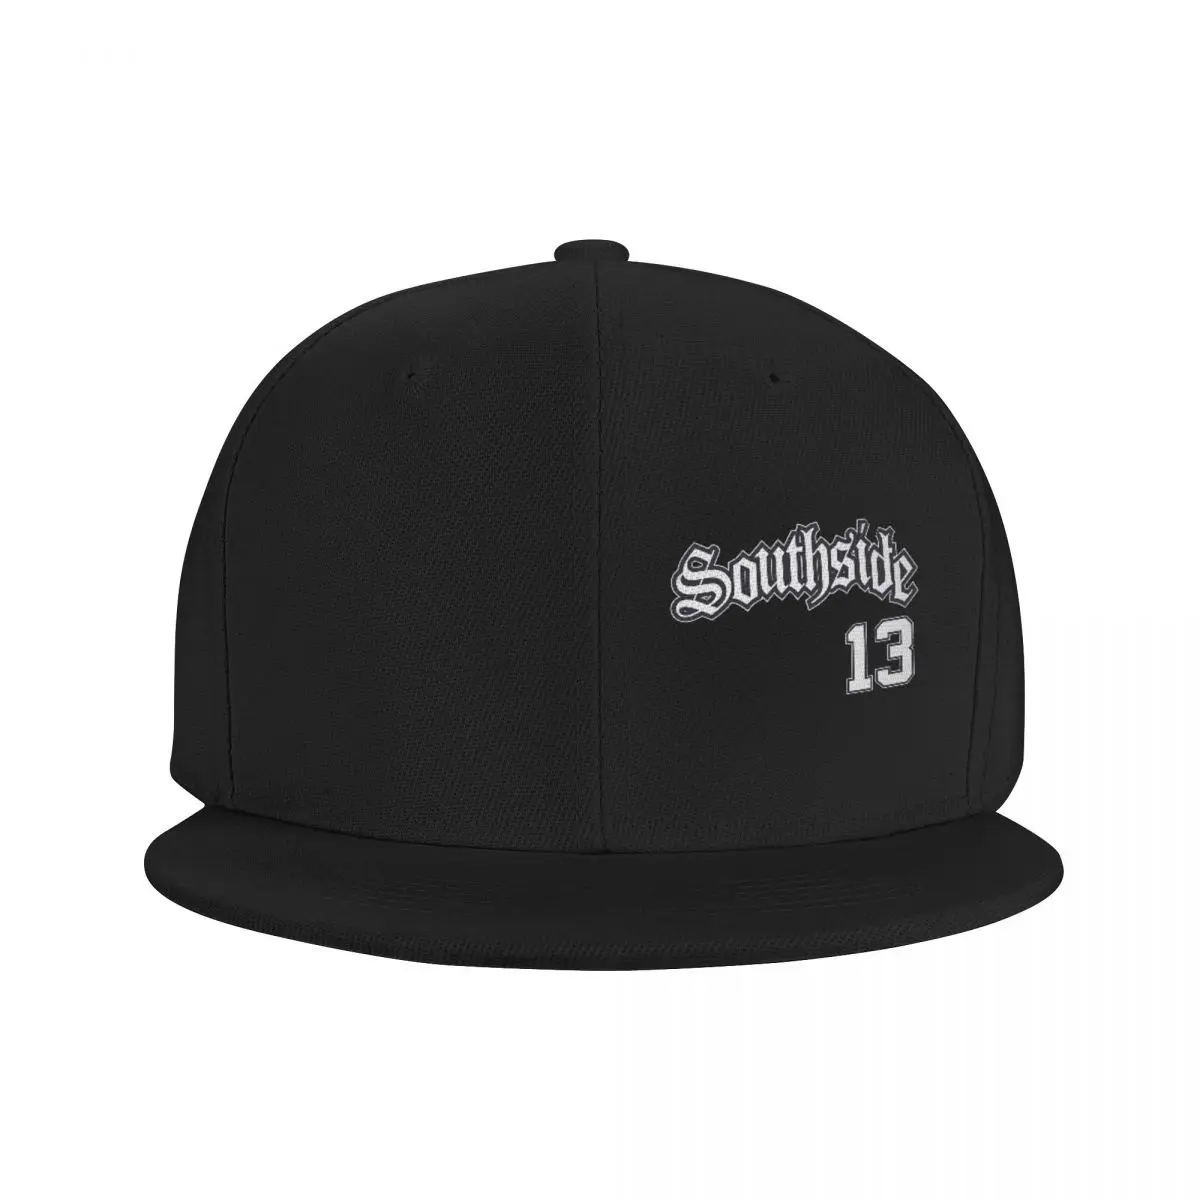 

Men'S Southside 13 Summer Sun Hats Men Cool Hiphop Punk Rock Truck Cap Women Fashion Baseball Caps